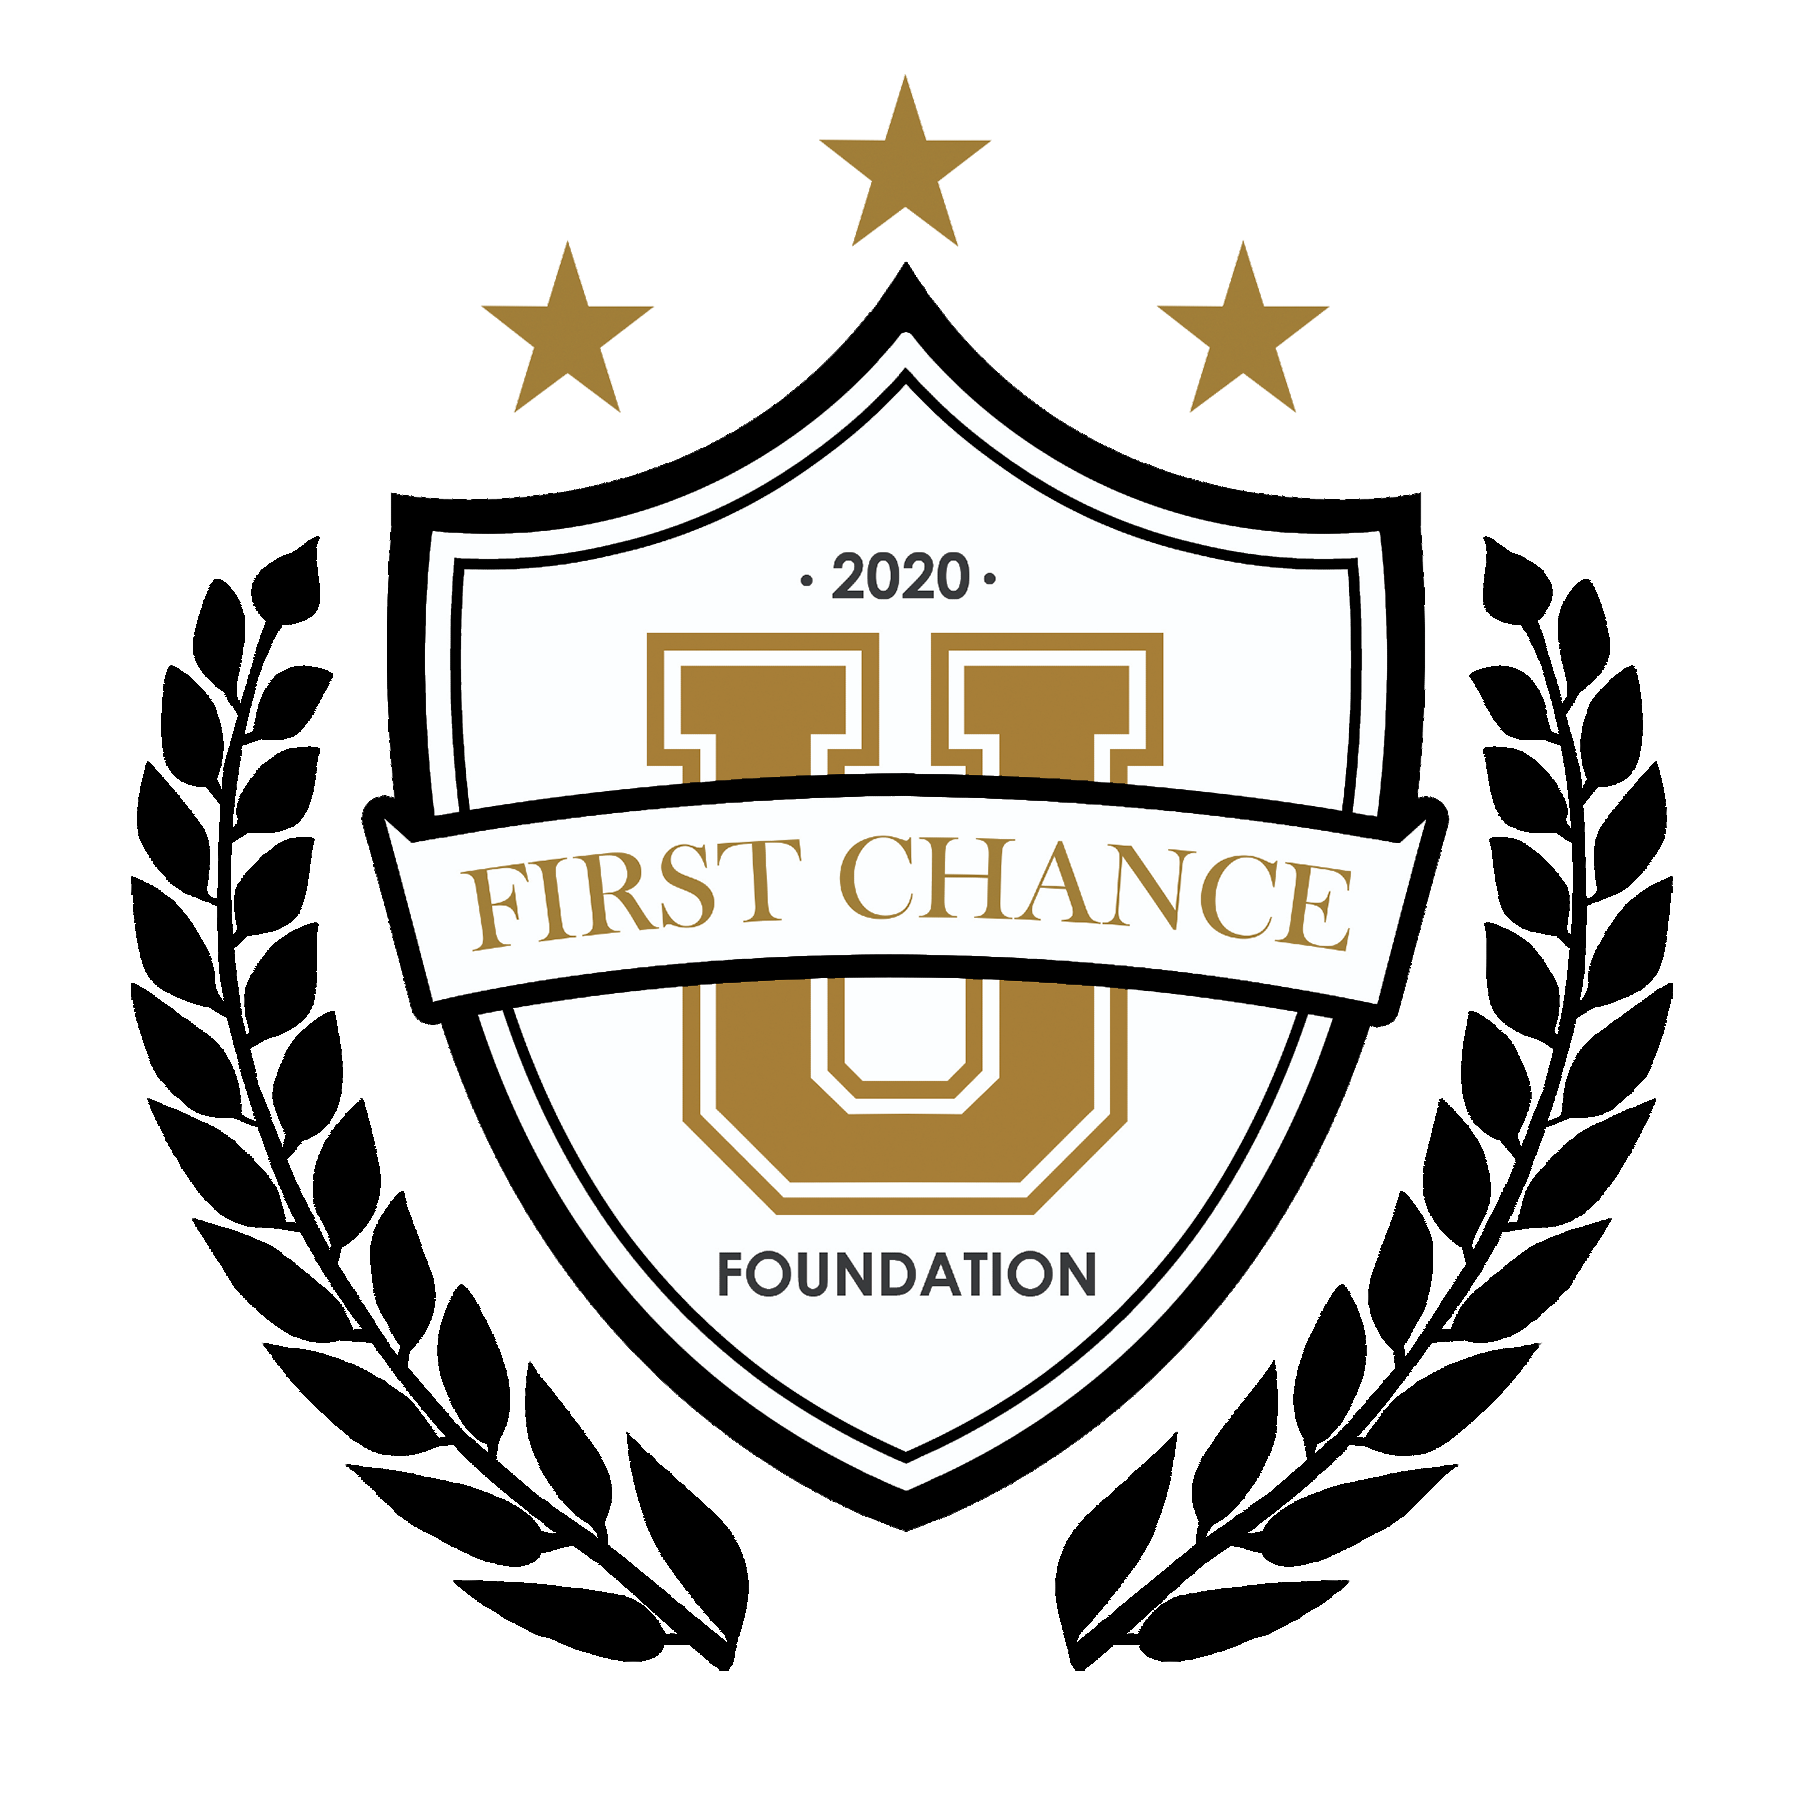 Jamar Taylors First Chance U Foundation logo